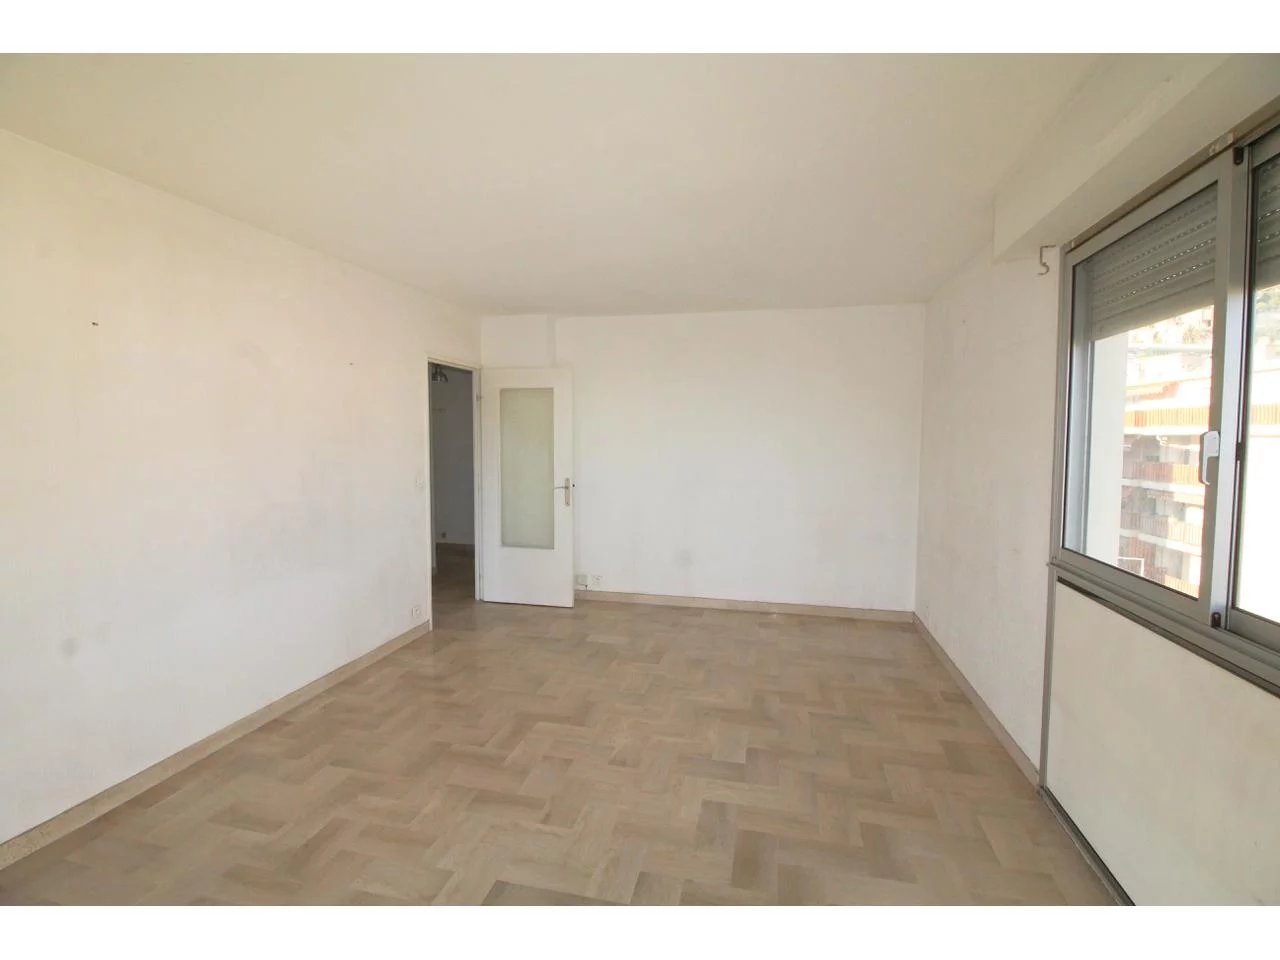 Appartement  2 Locali 41.55m2  In vendita   190 000 €